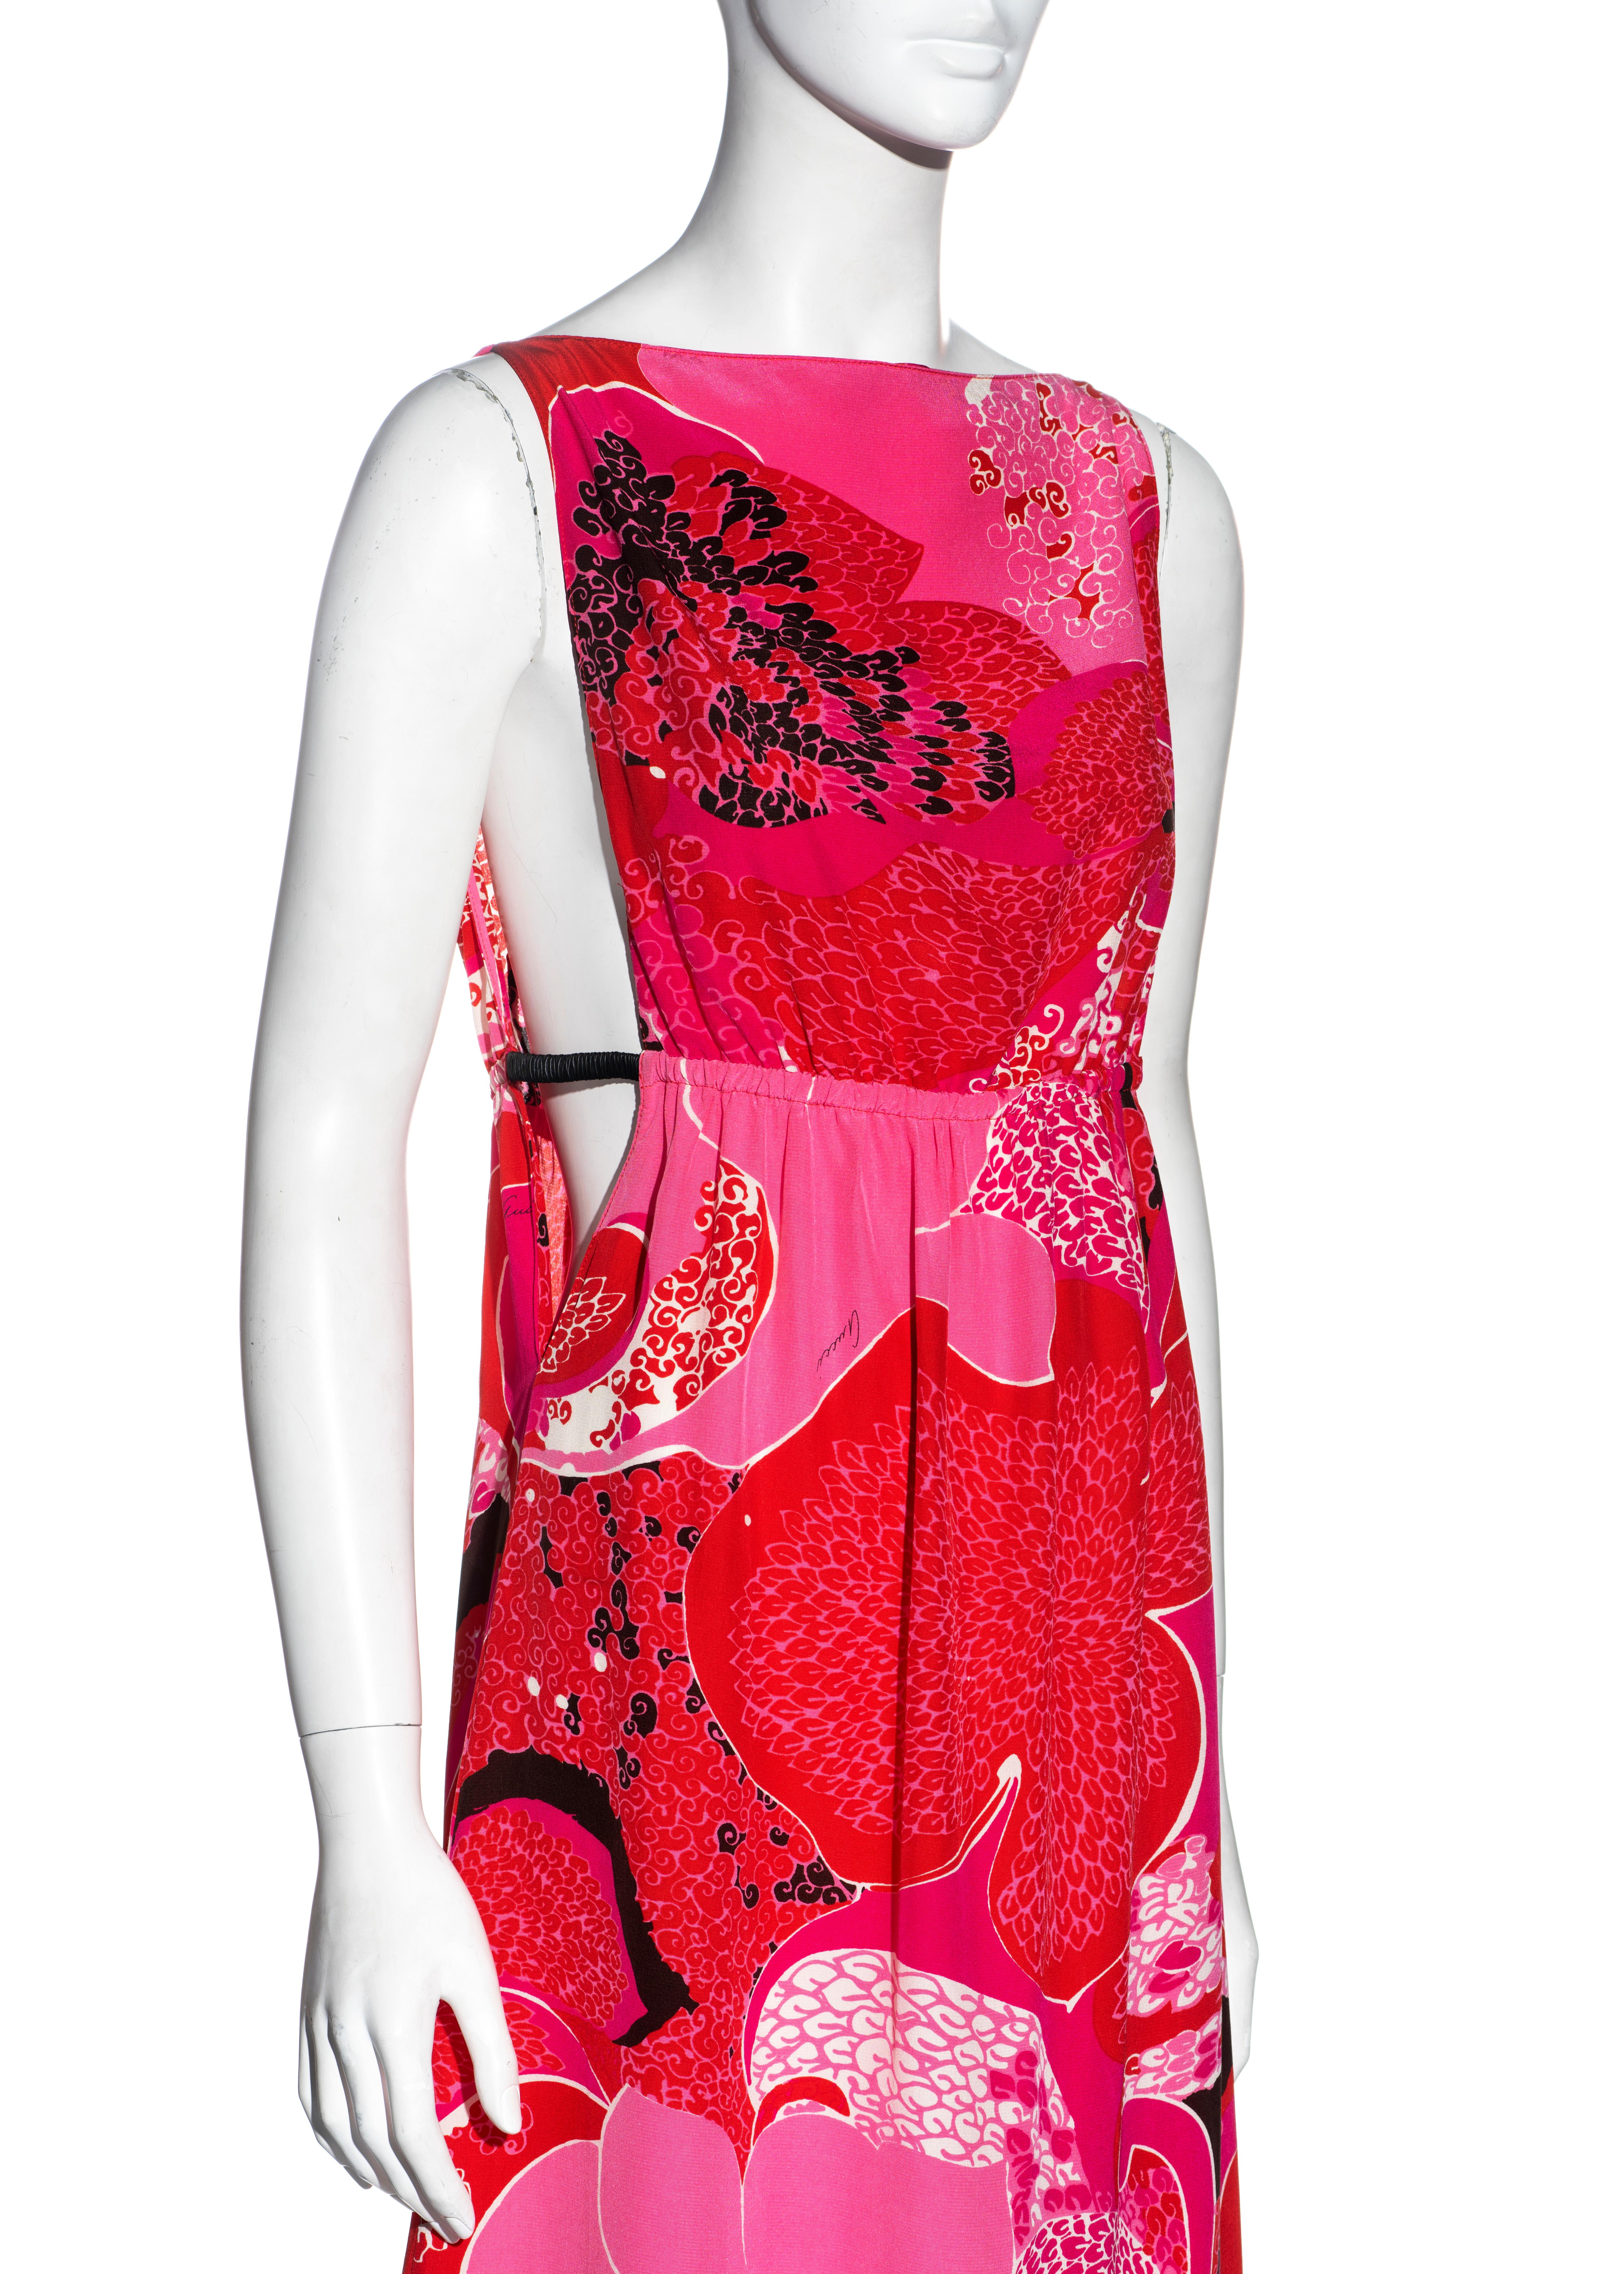 tom ford pink dress